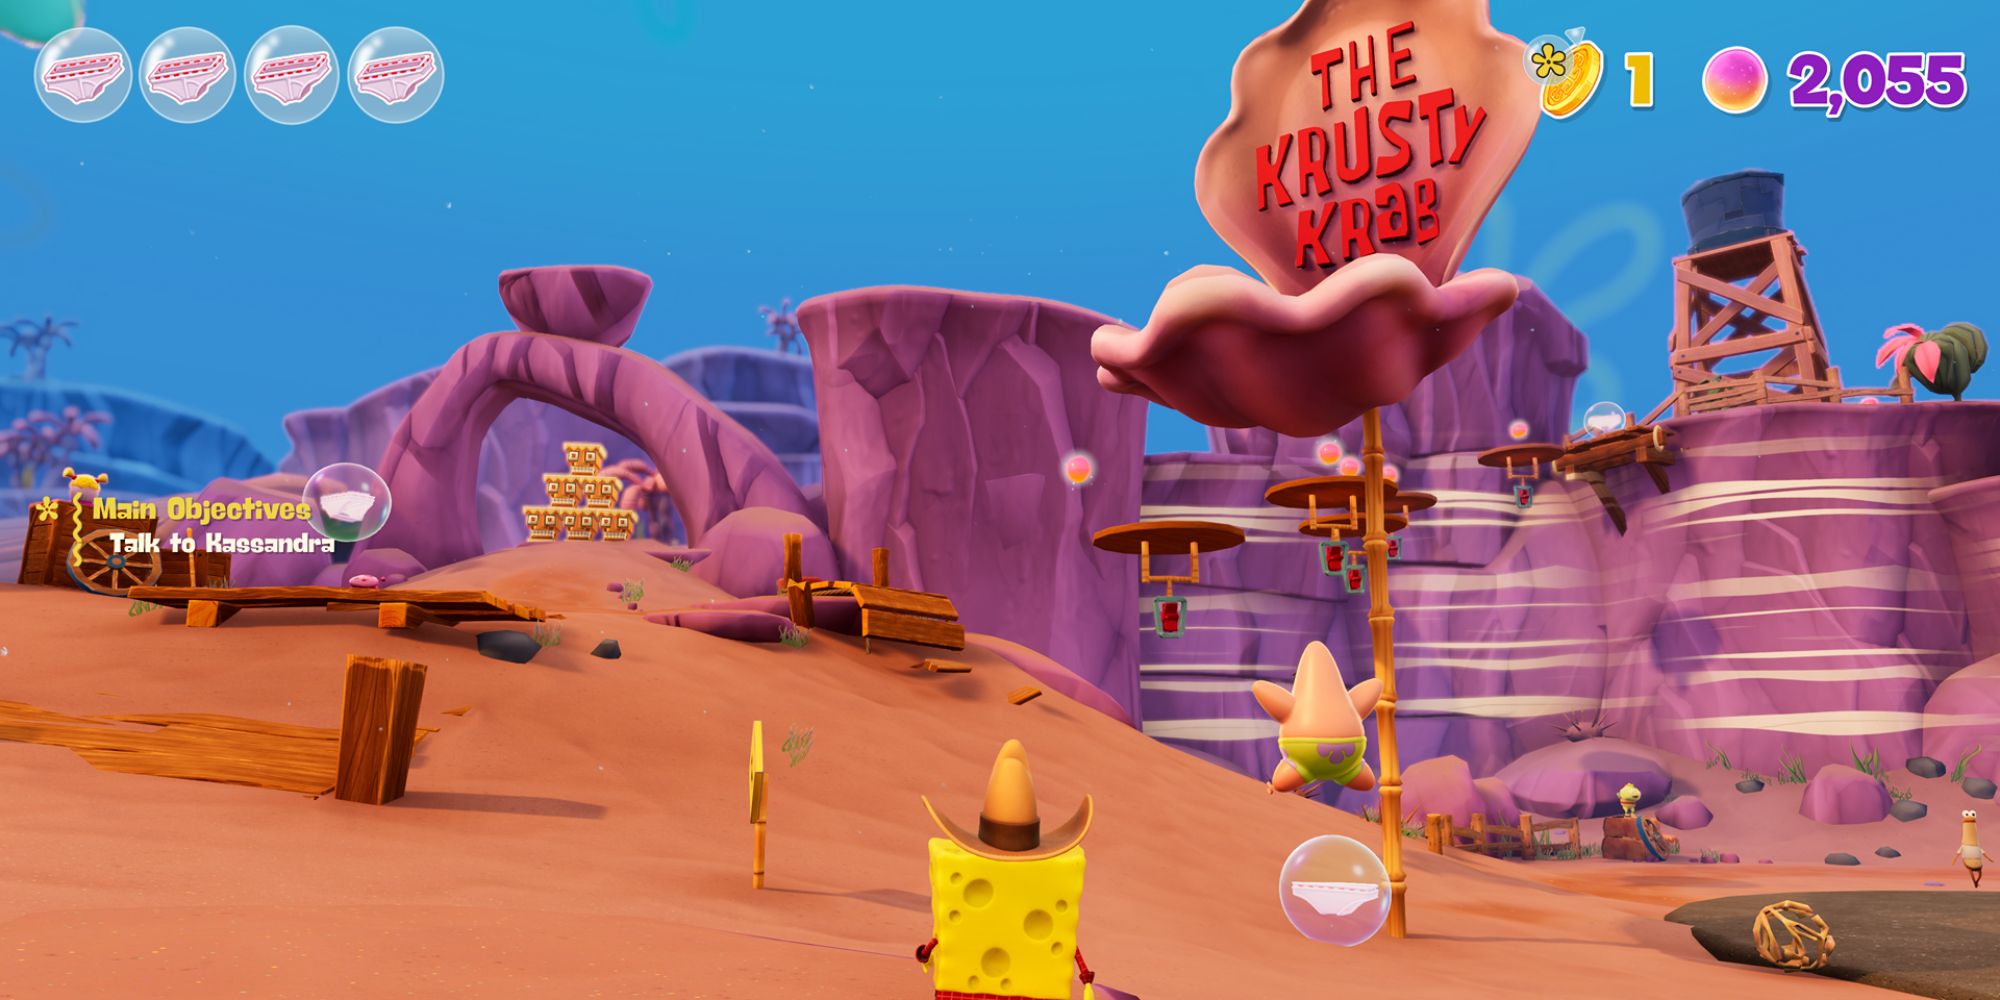 SpongeBob Cosmic Shake Screenshot Of The Krusty Krab Sign And Surrounding Area